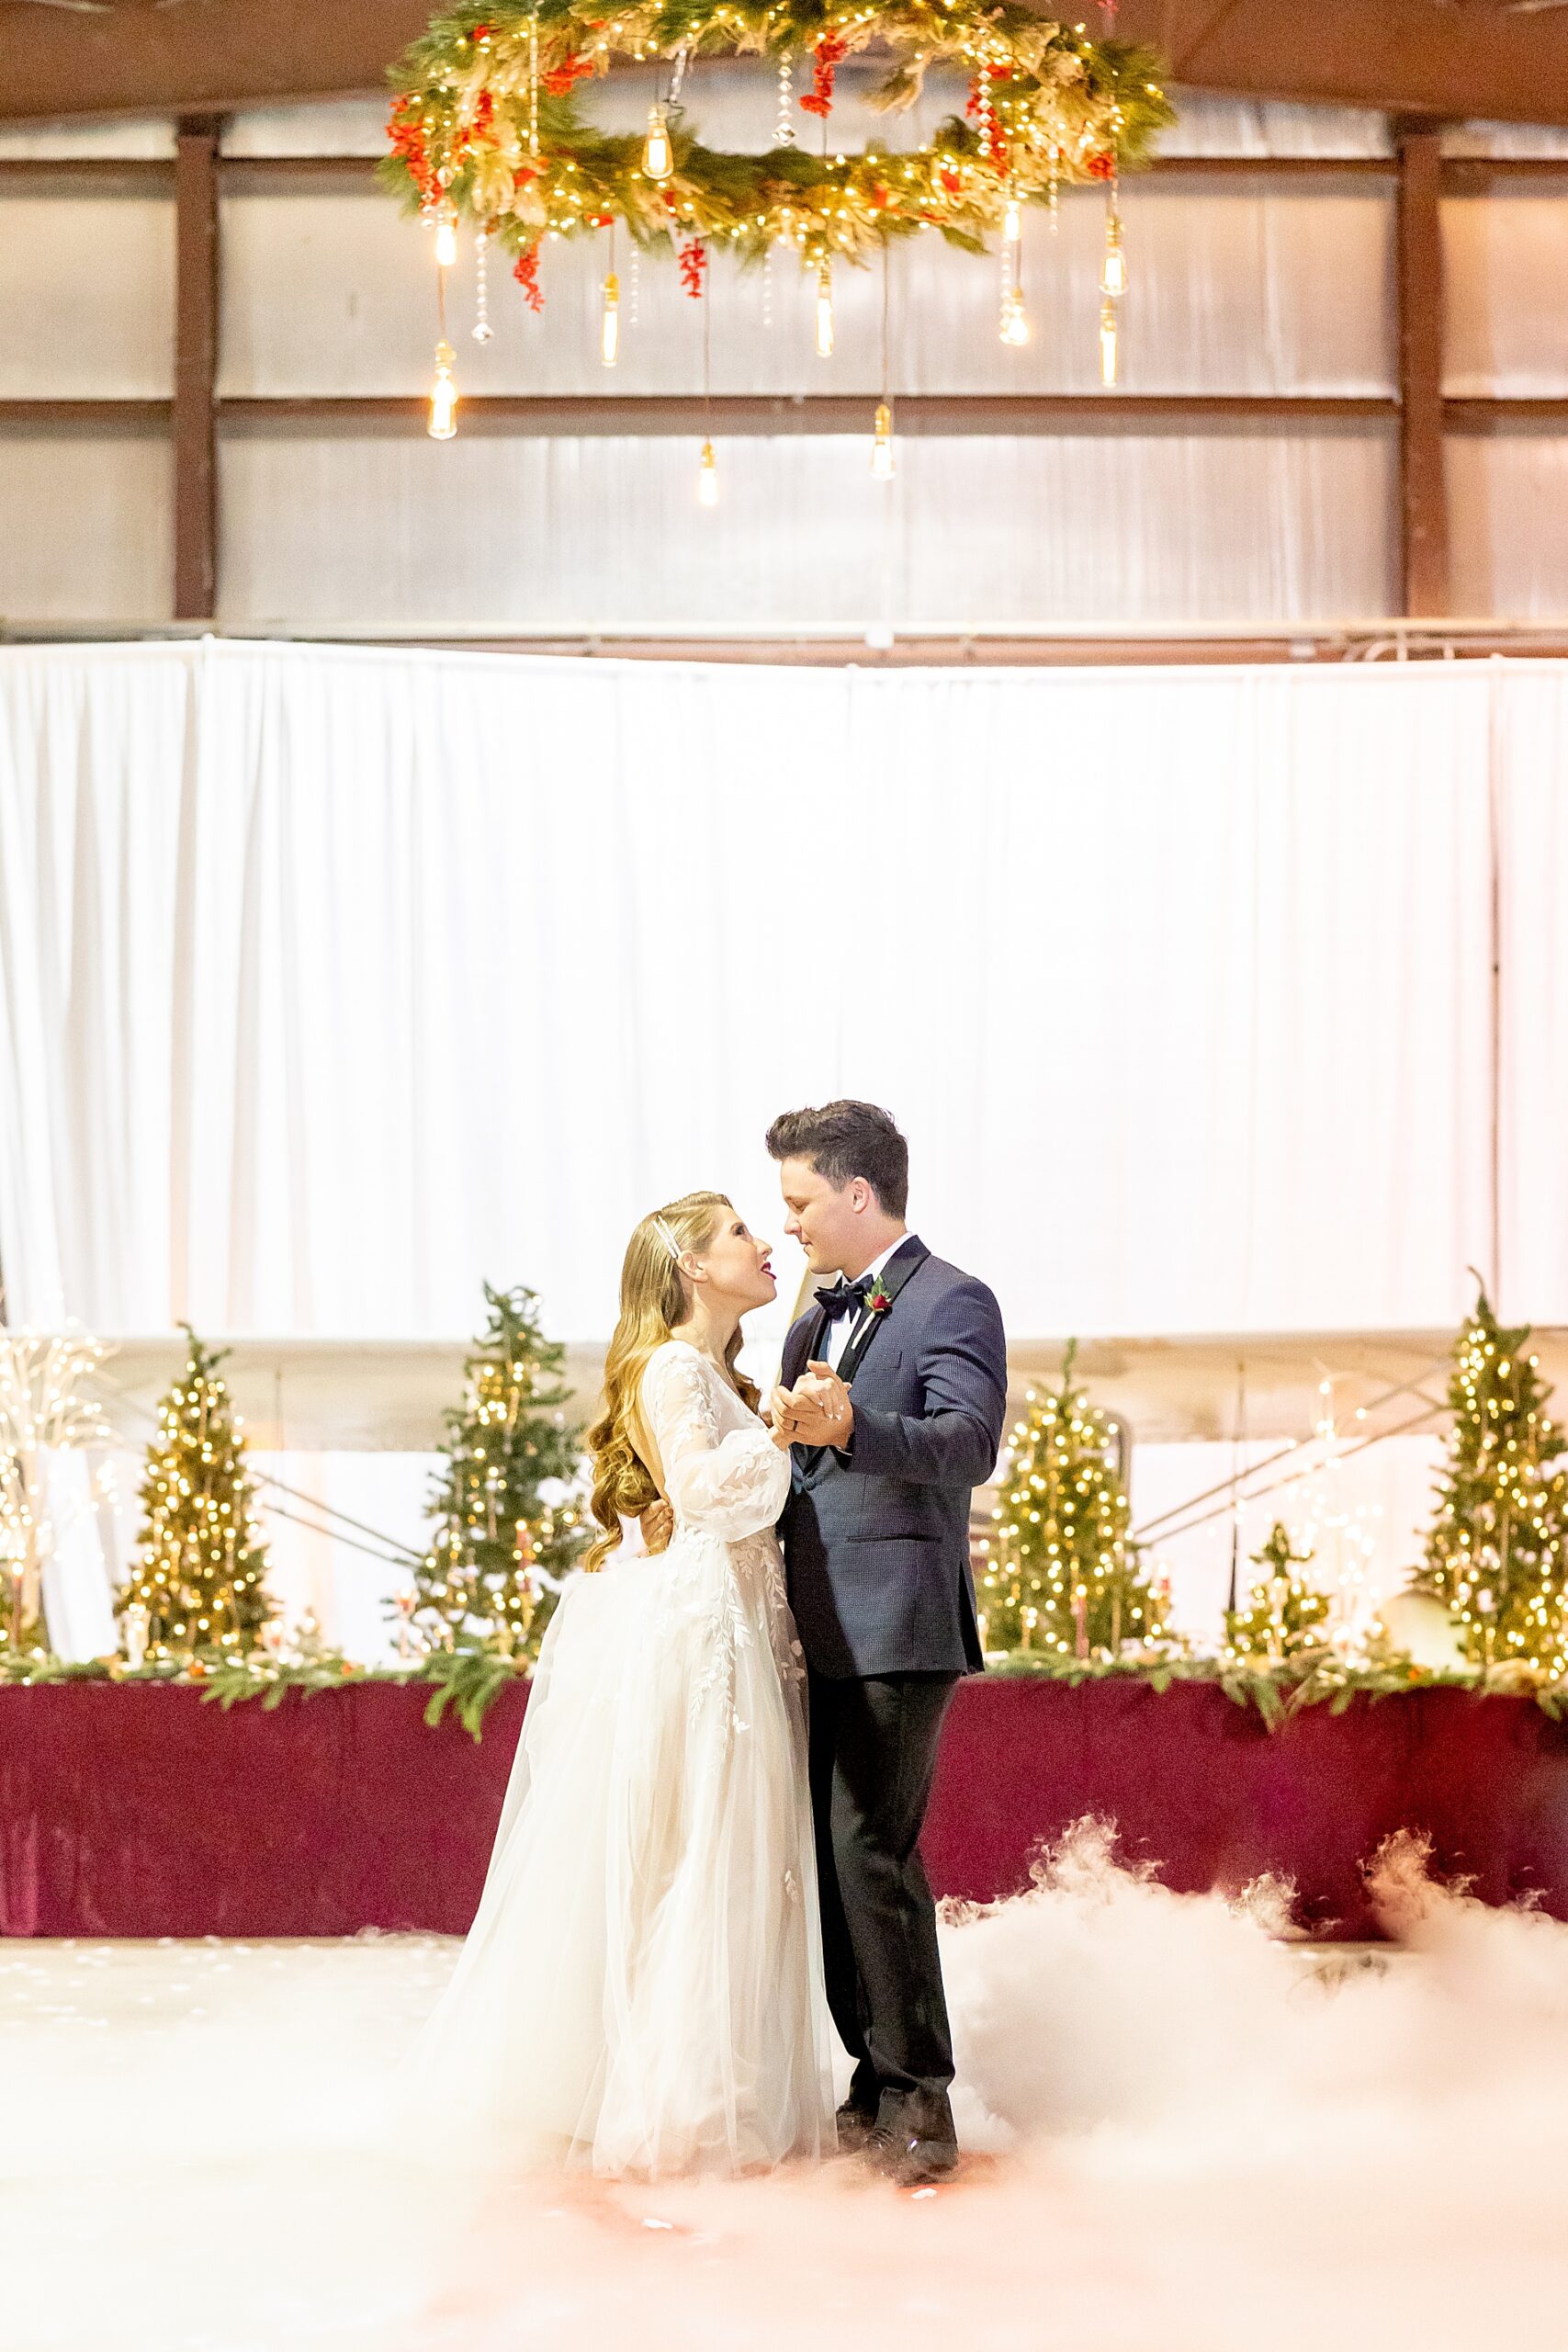 Newlyweds dance together at Romantic Vintage Christmas Wedding